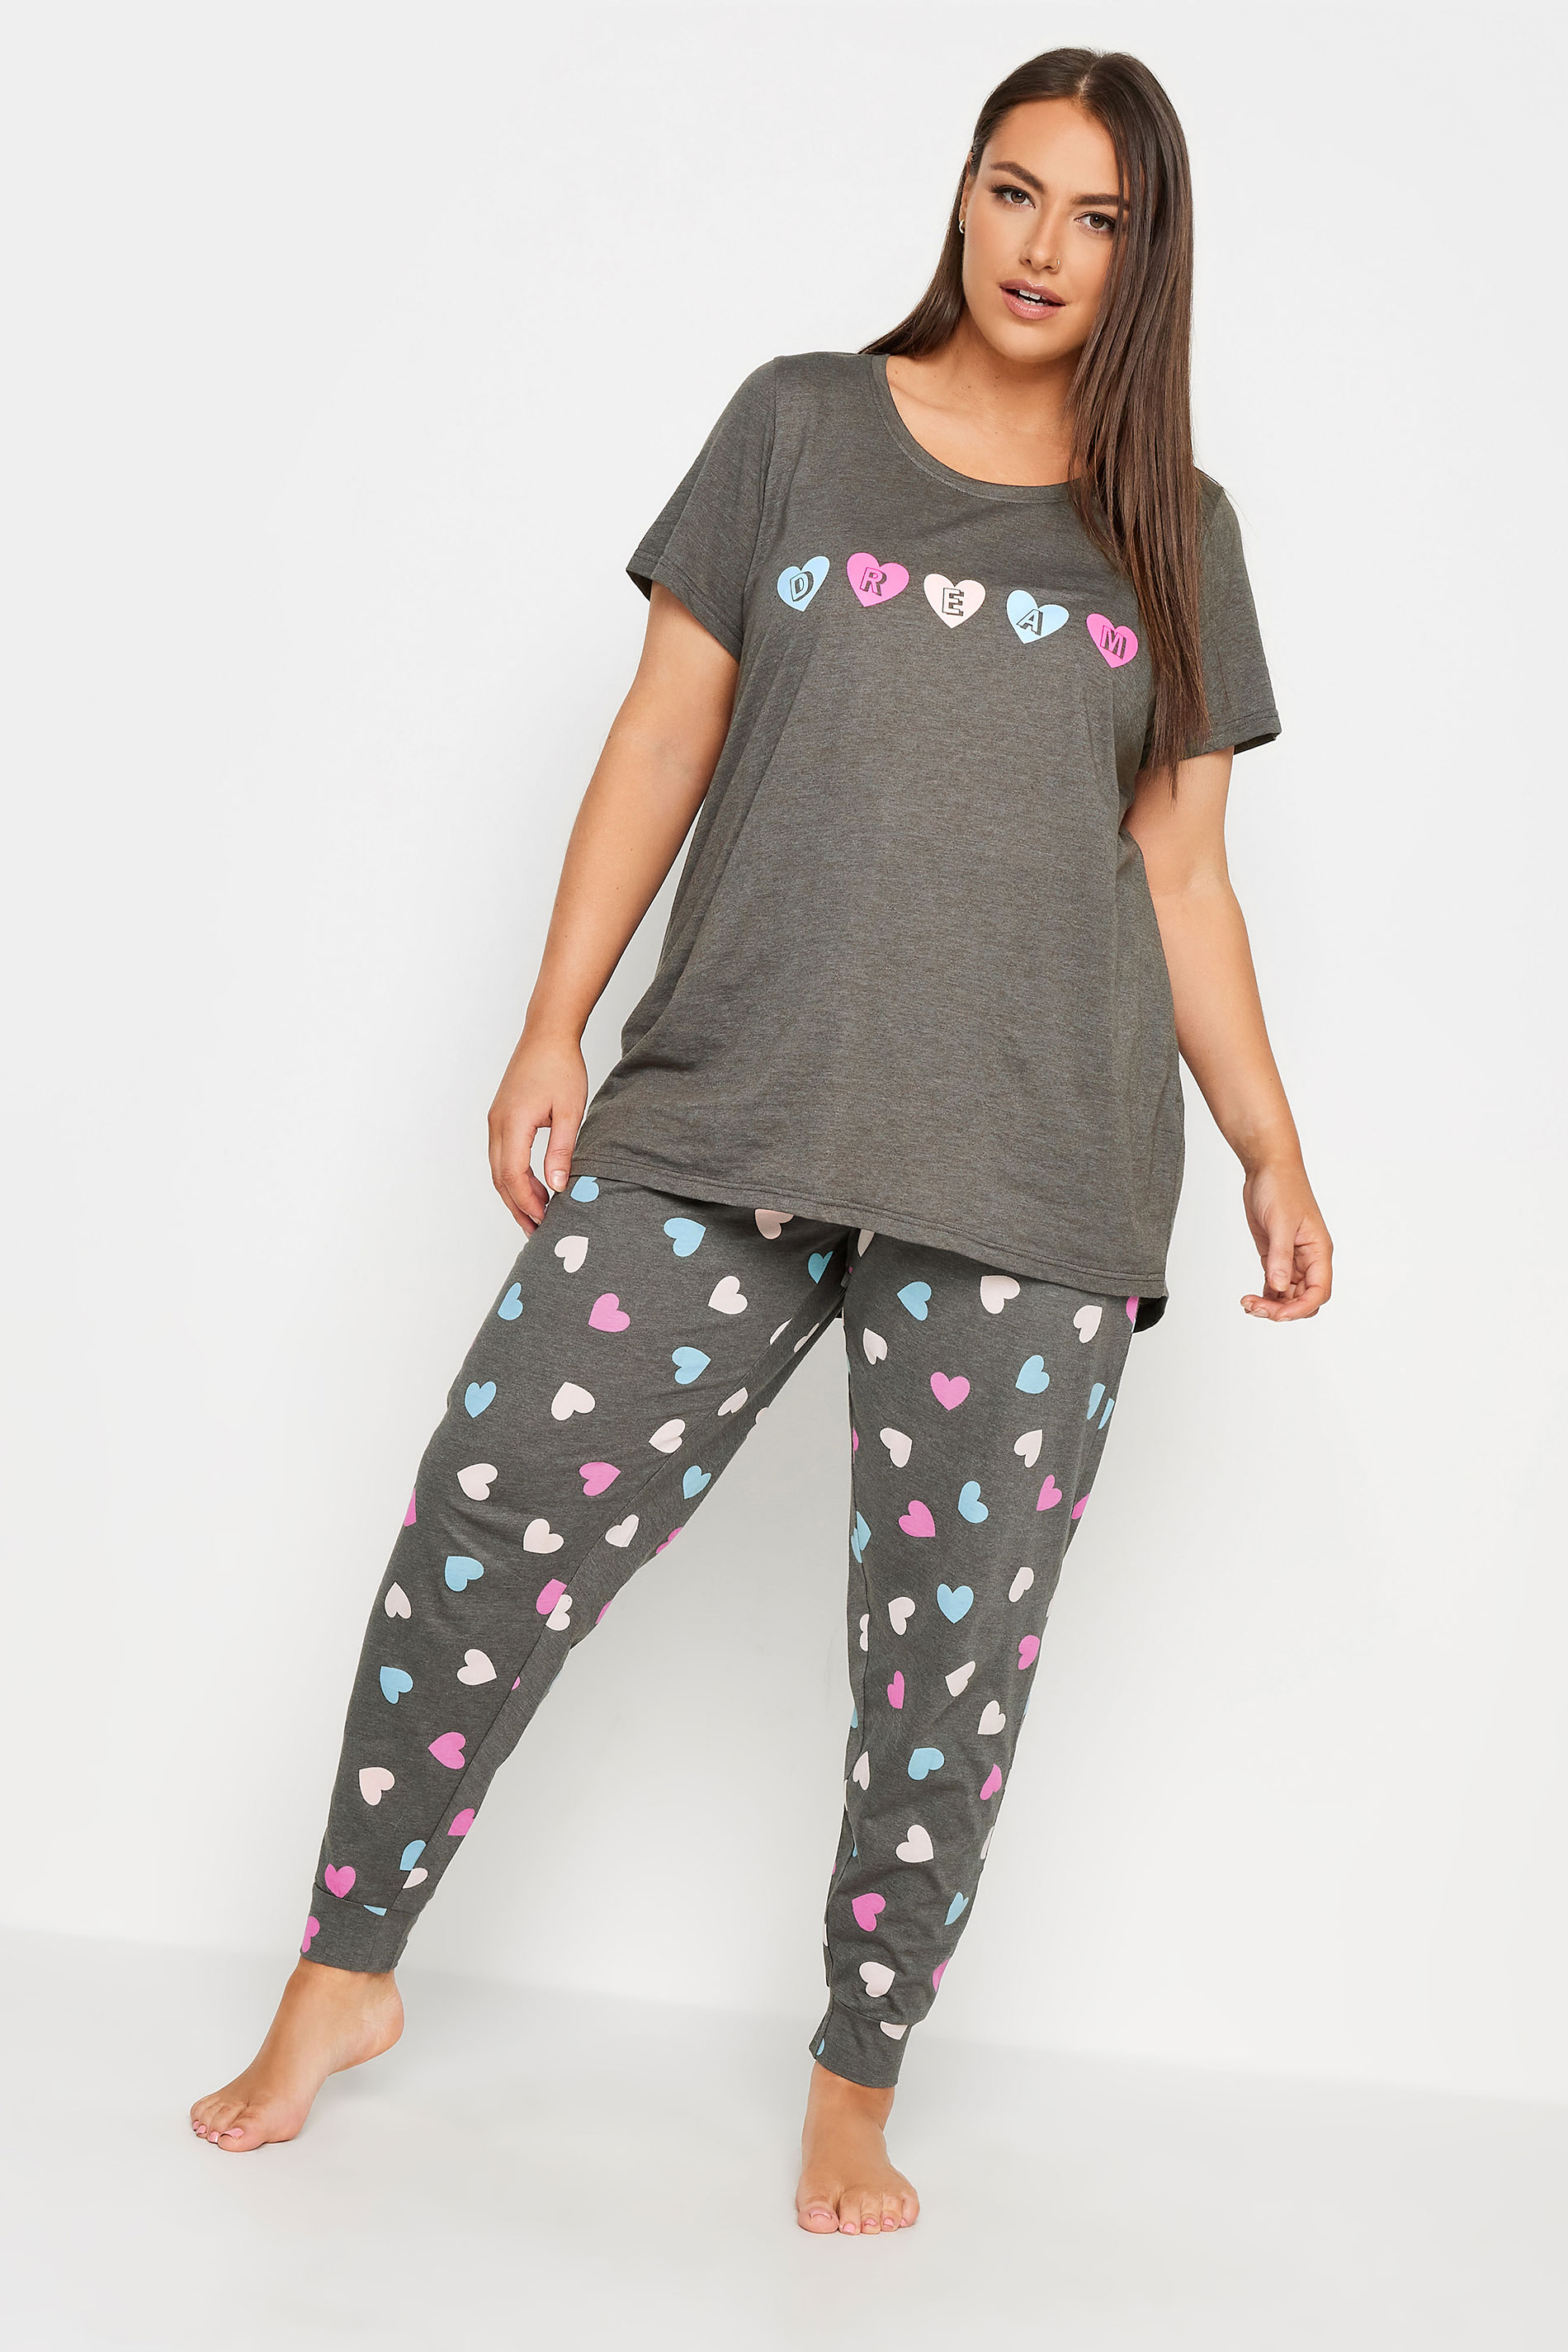 YOURS Plus Size Grey 'Dream' Slogan Heart Print Pyjama Set | Yours Clothing 2